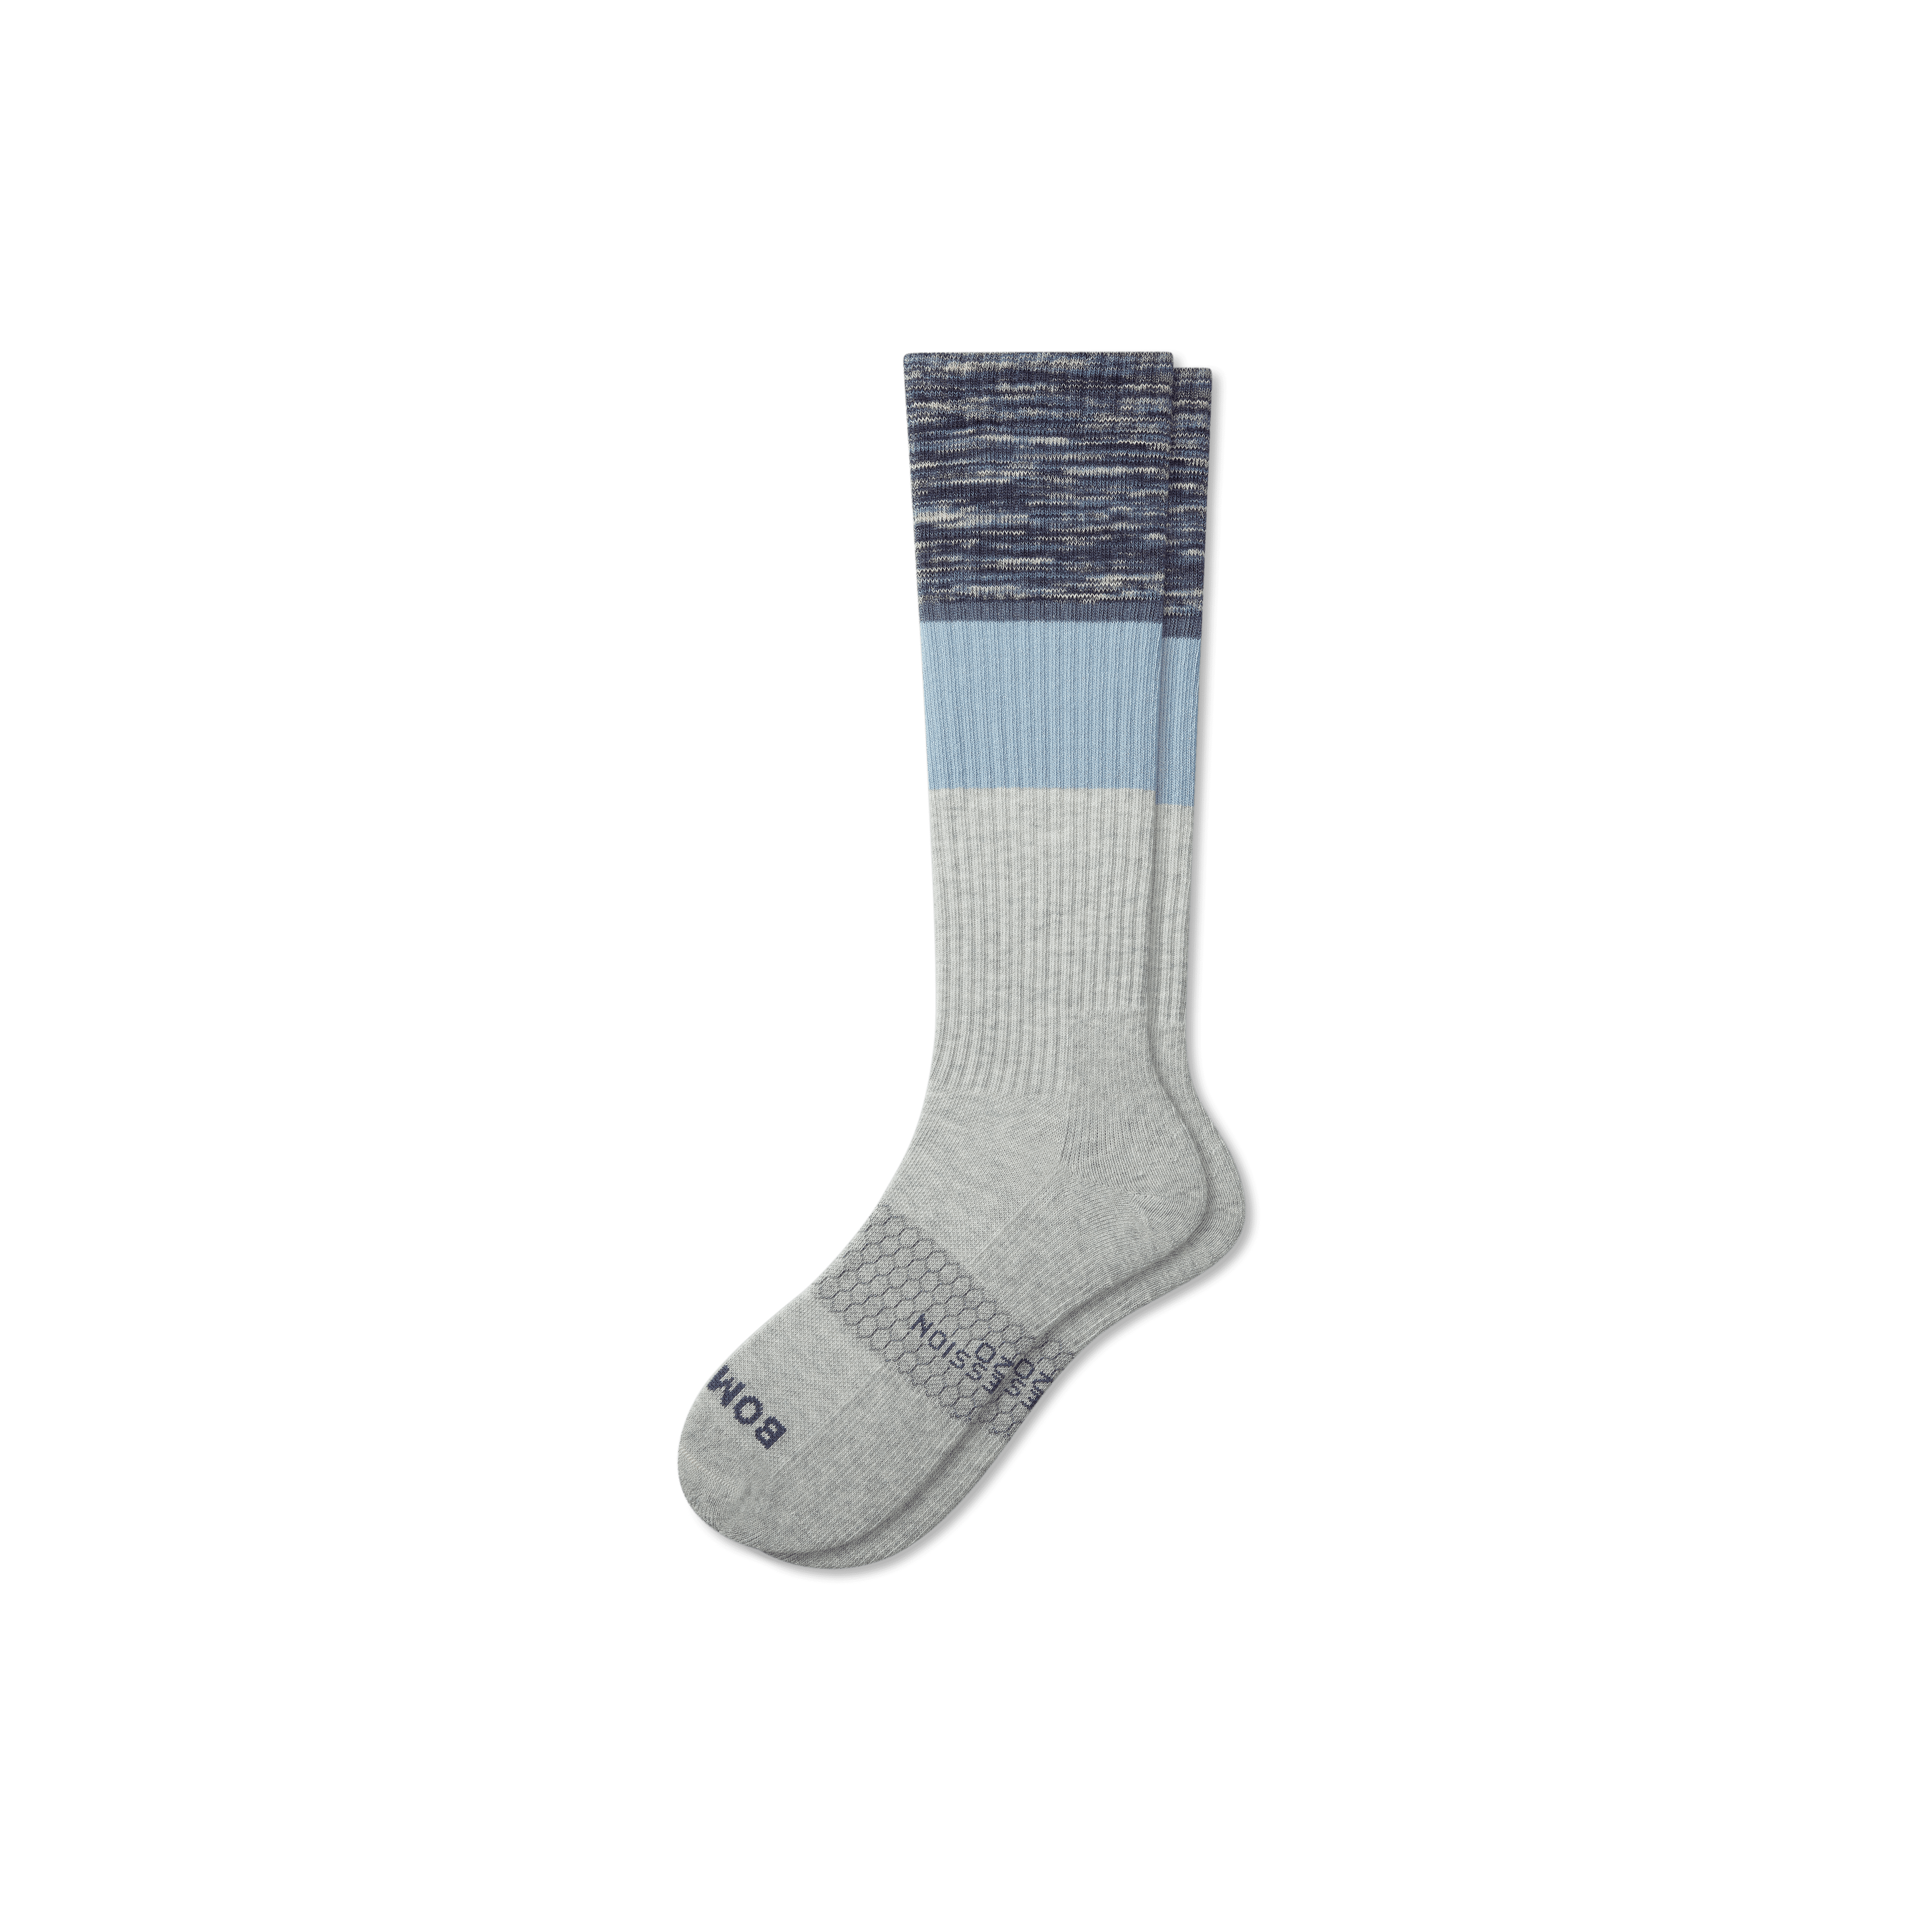 Everyday Style Basketweave 15-20 mmHg Unisex Compression Support Socks